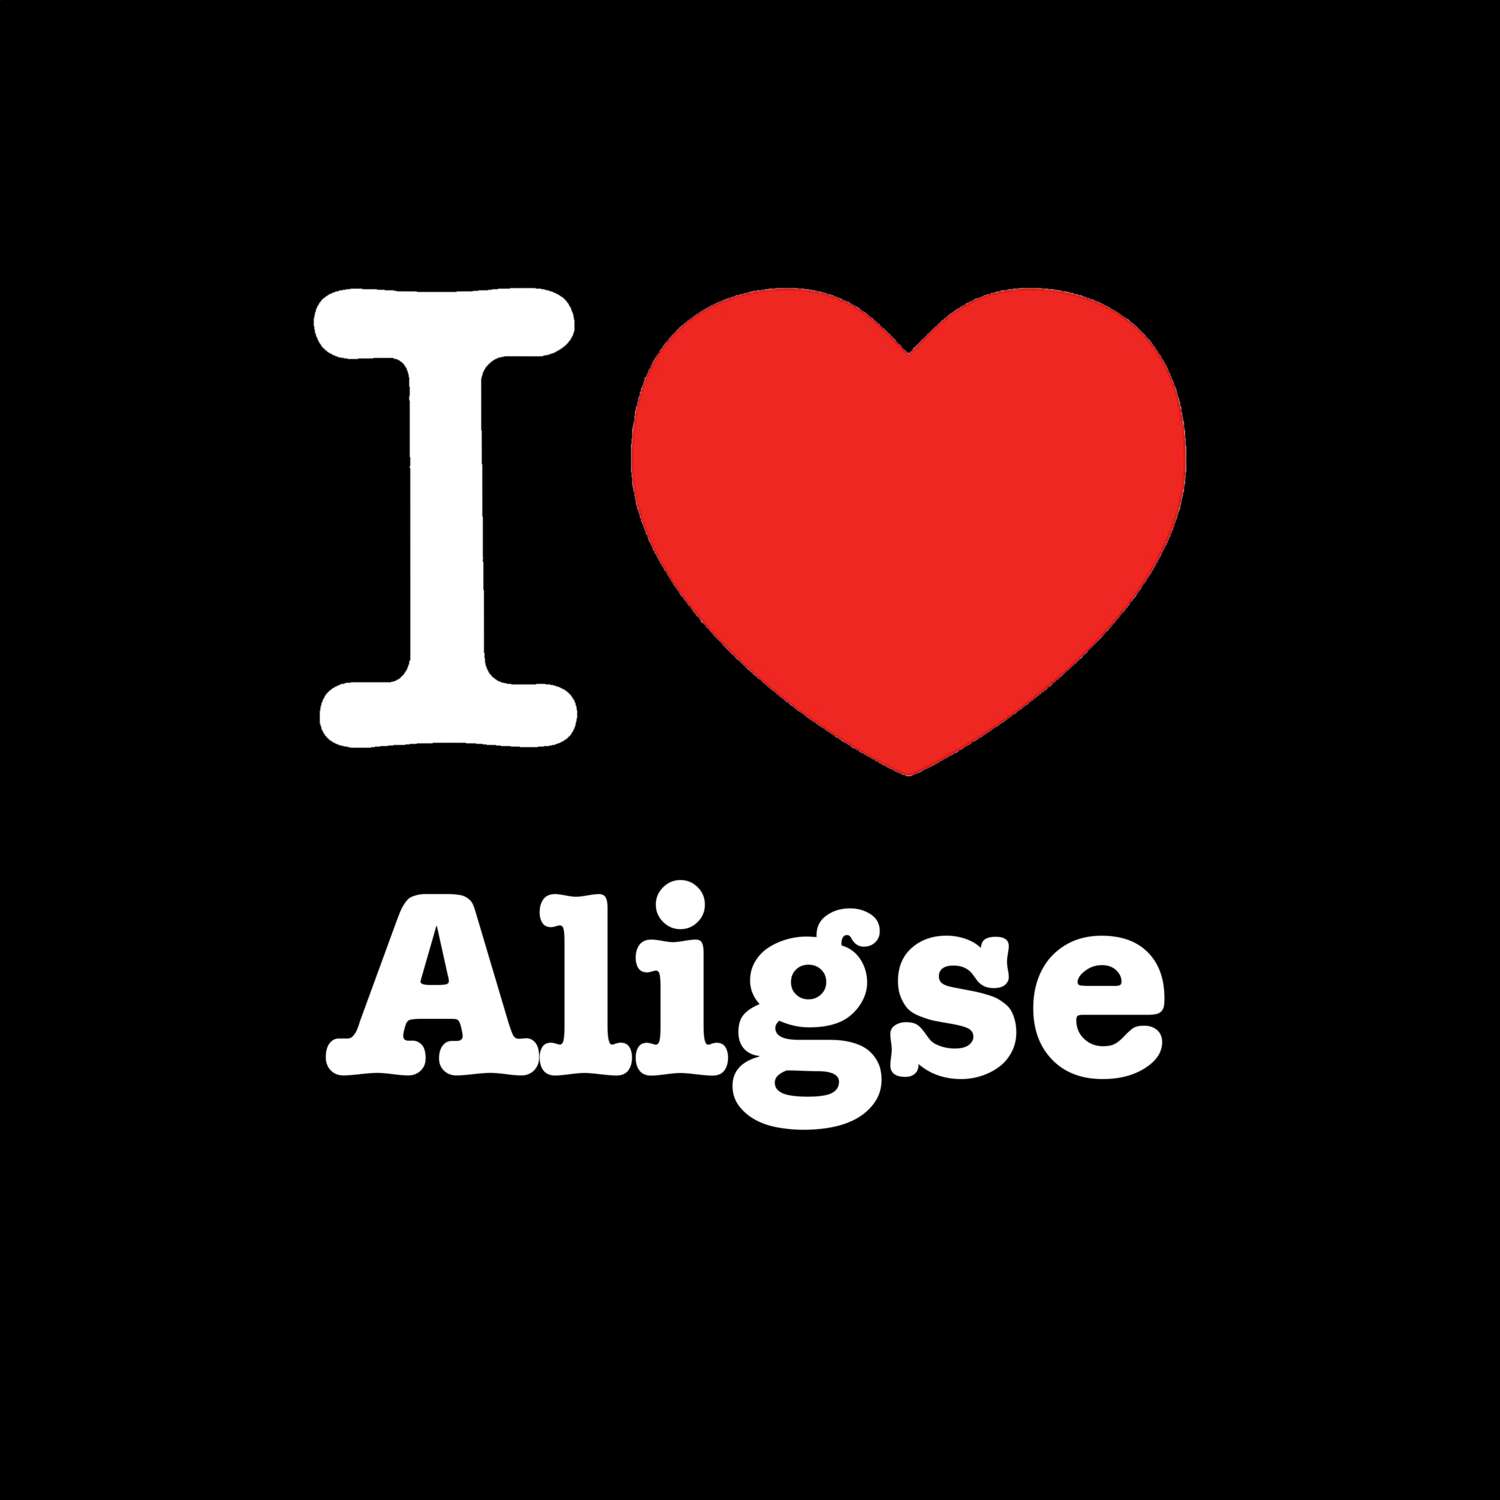 Aligse T-Shirt »I love«